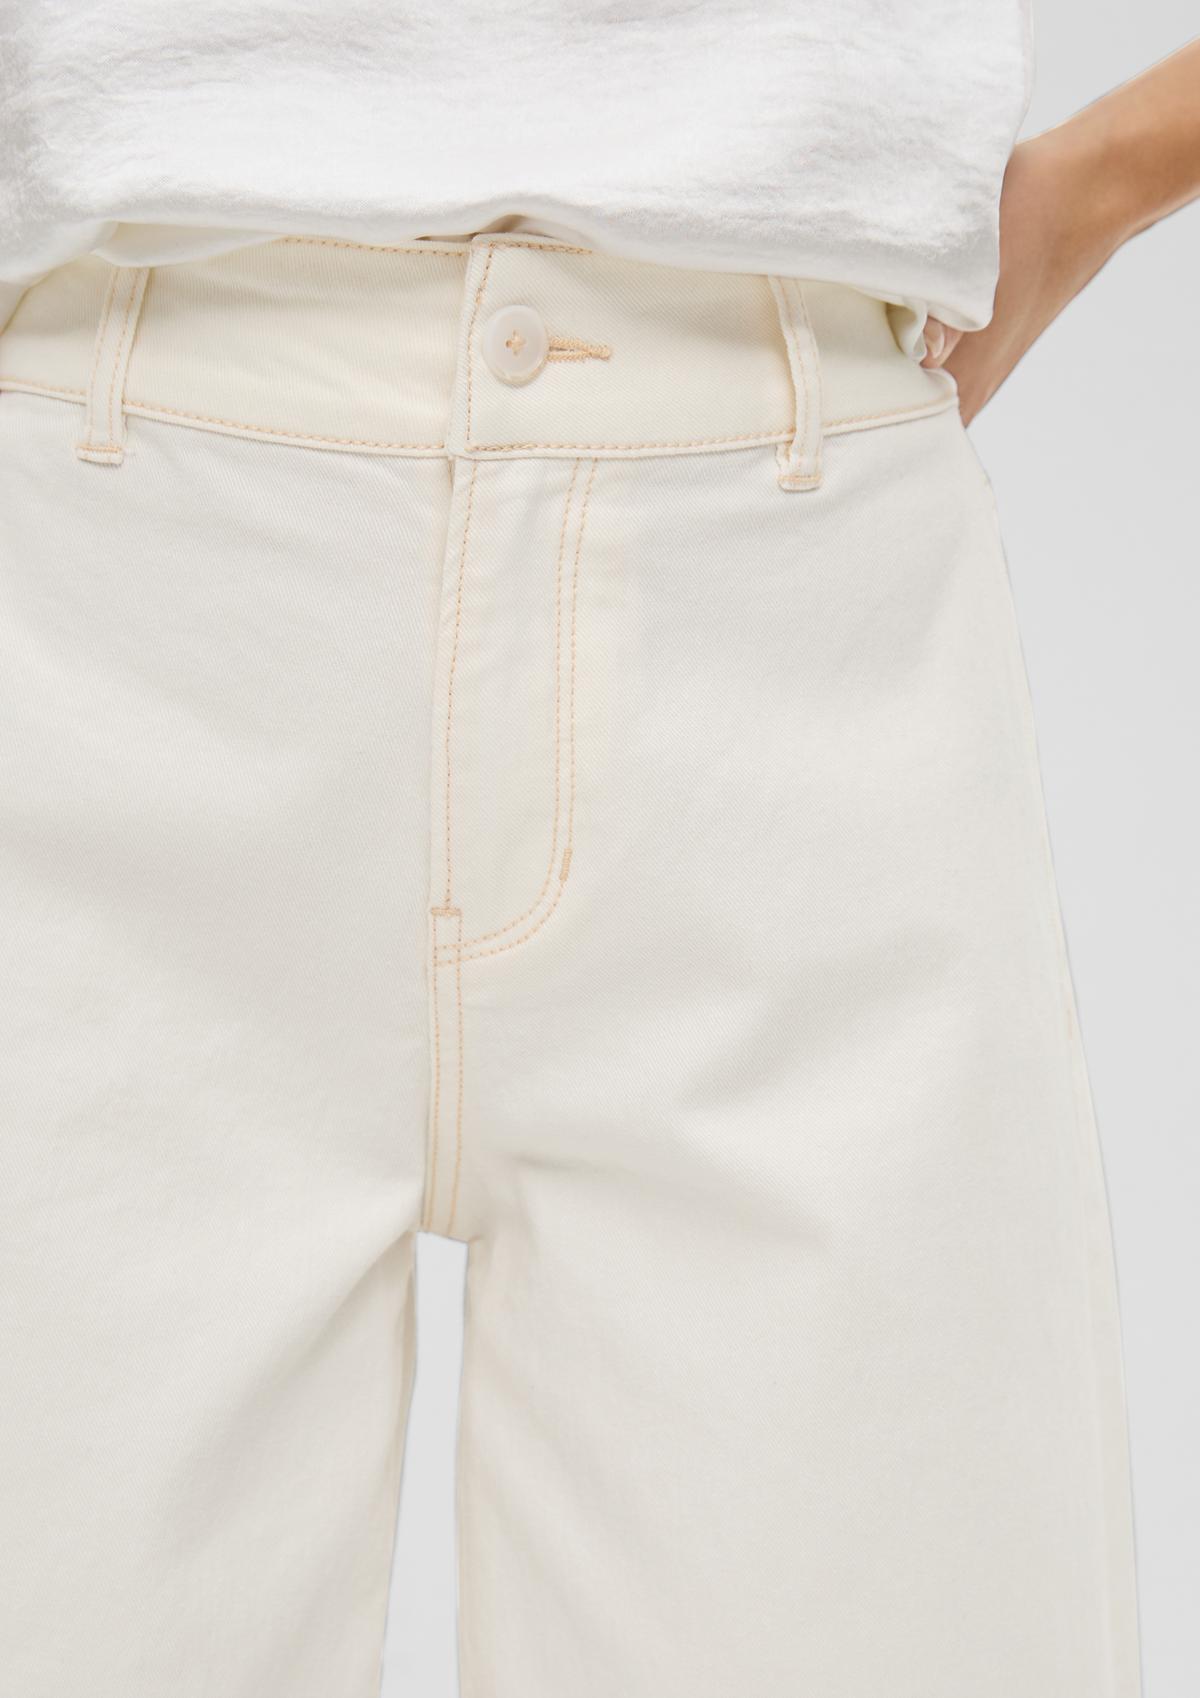 s.Oliver Suri culotte jeans / regular fit / mid rise / wide leg